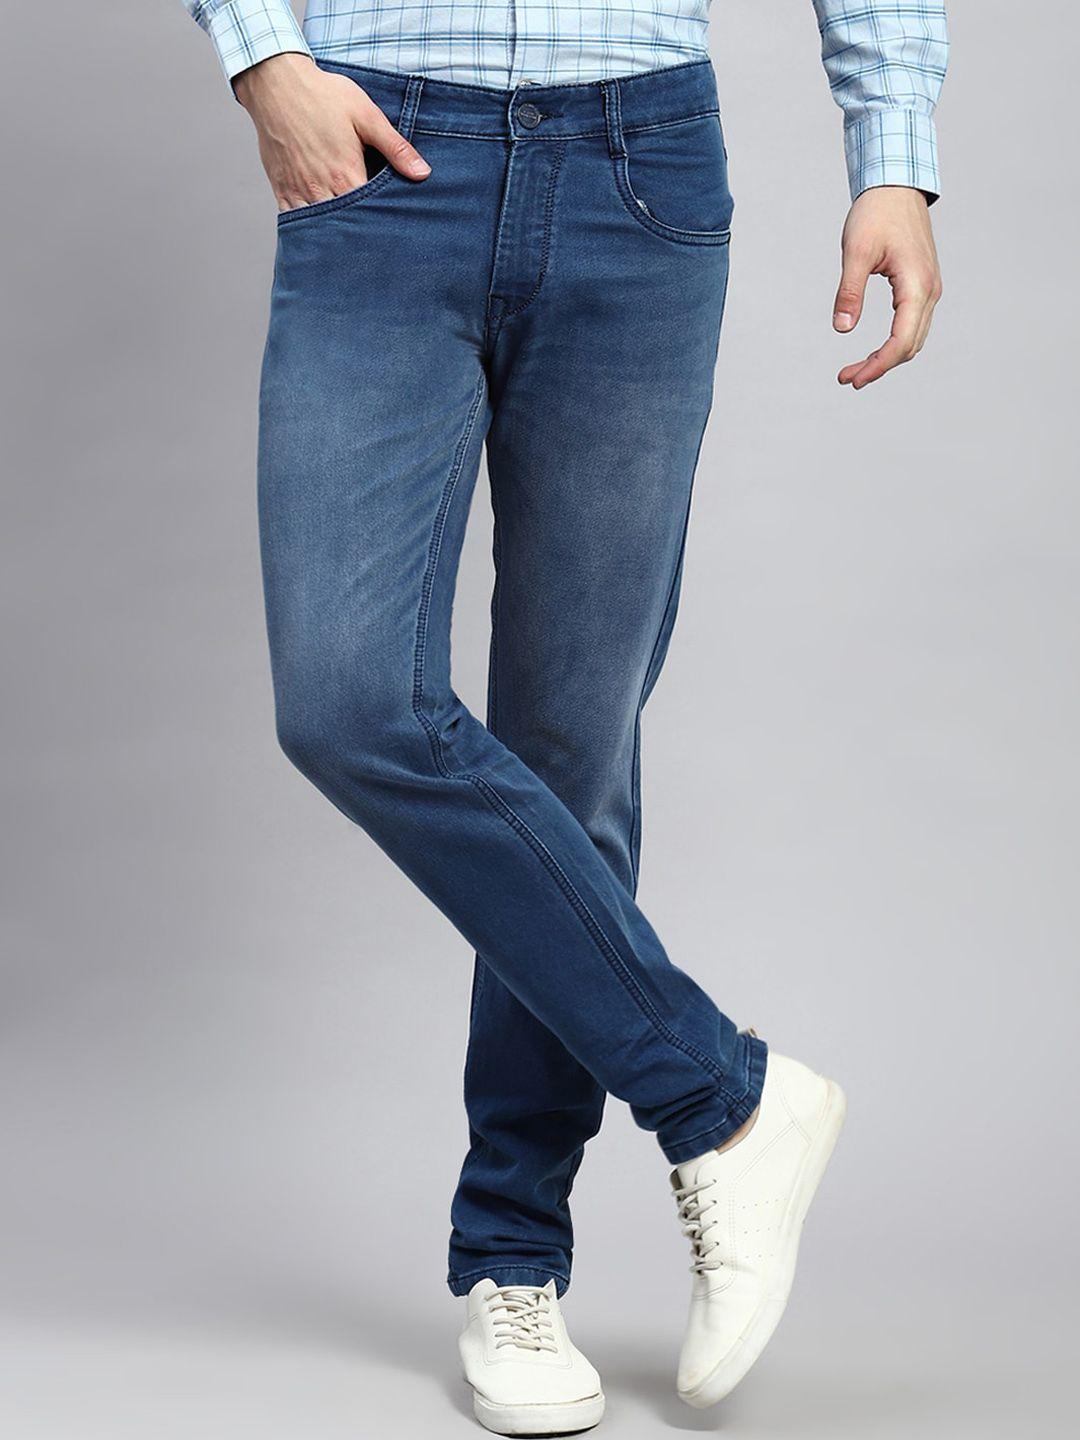 monte-carlo-men-skinny-fit-light-fade-jeans